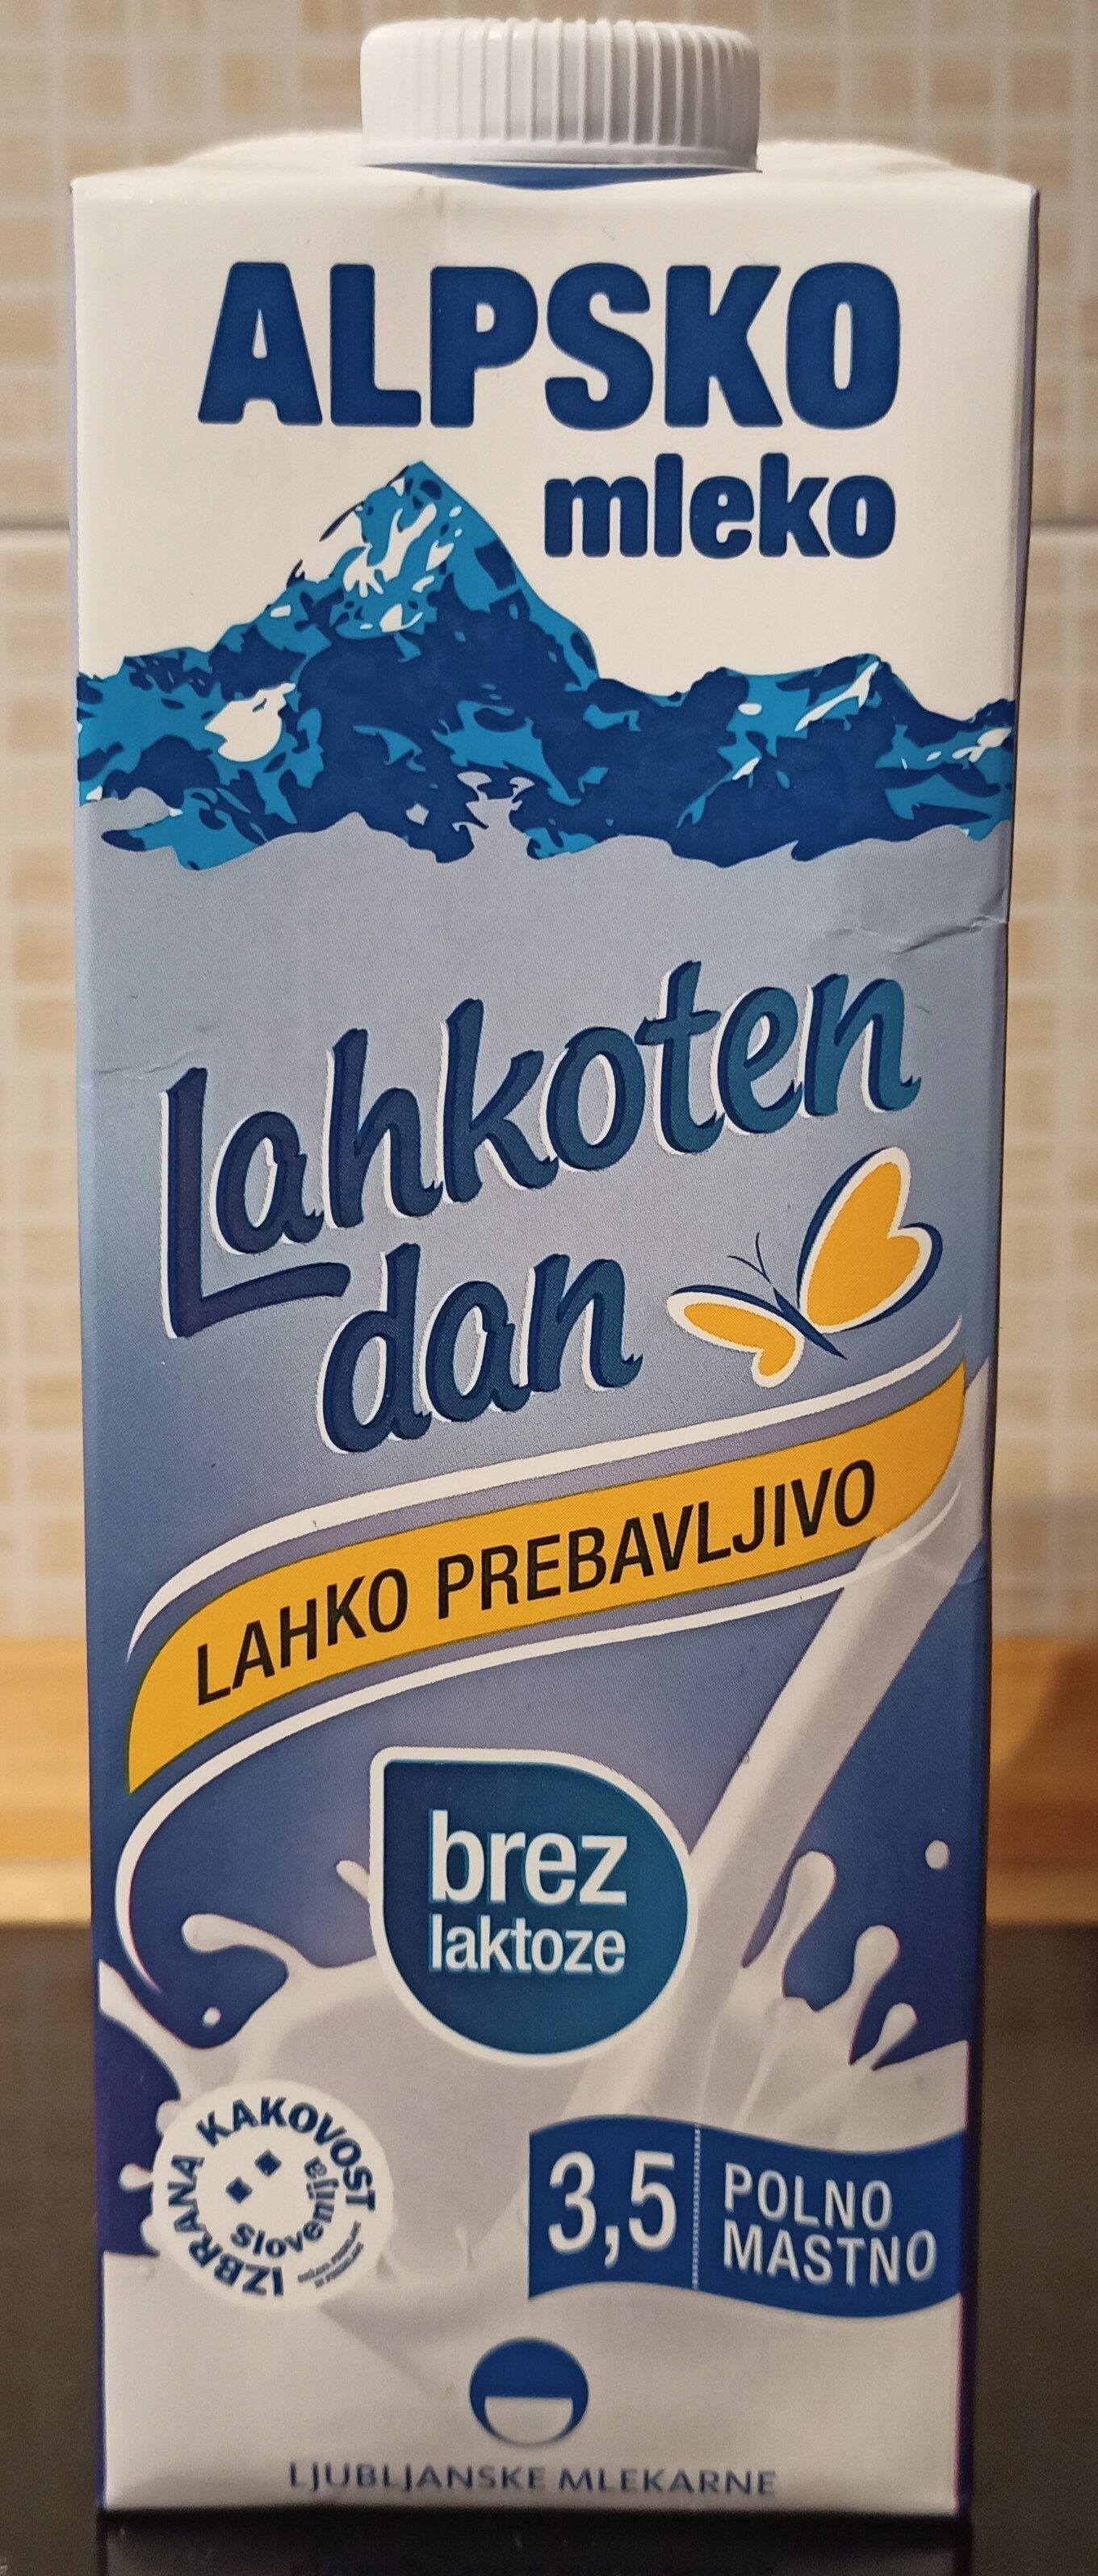 Alpsko mleko Lakhoten dan - نتاج - en